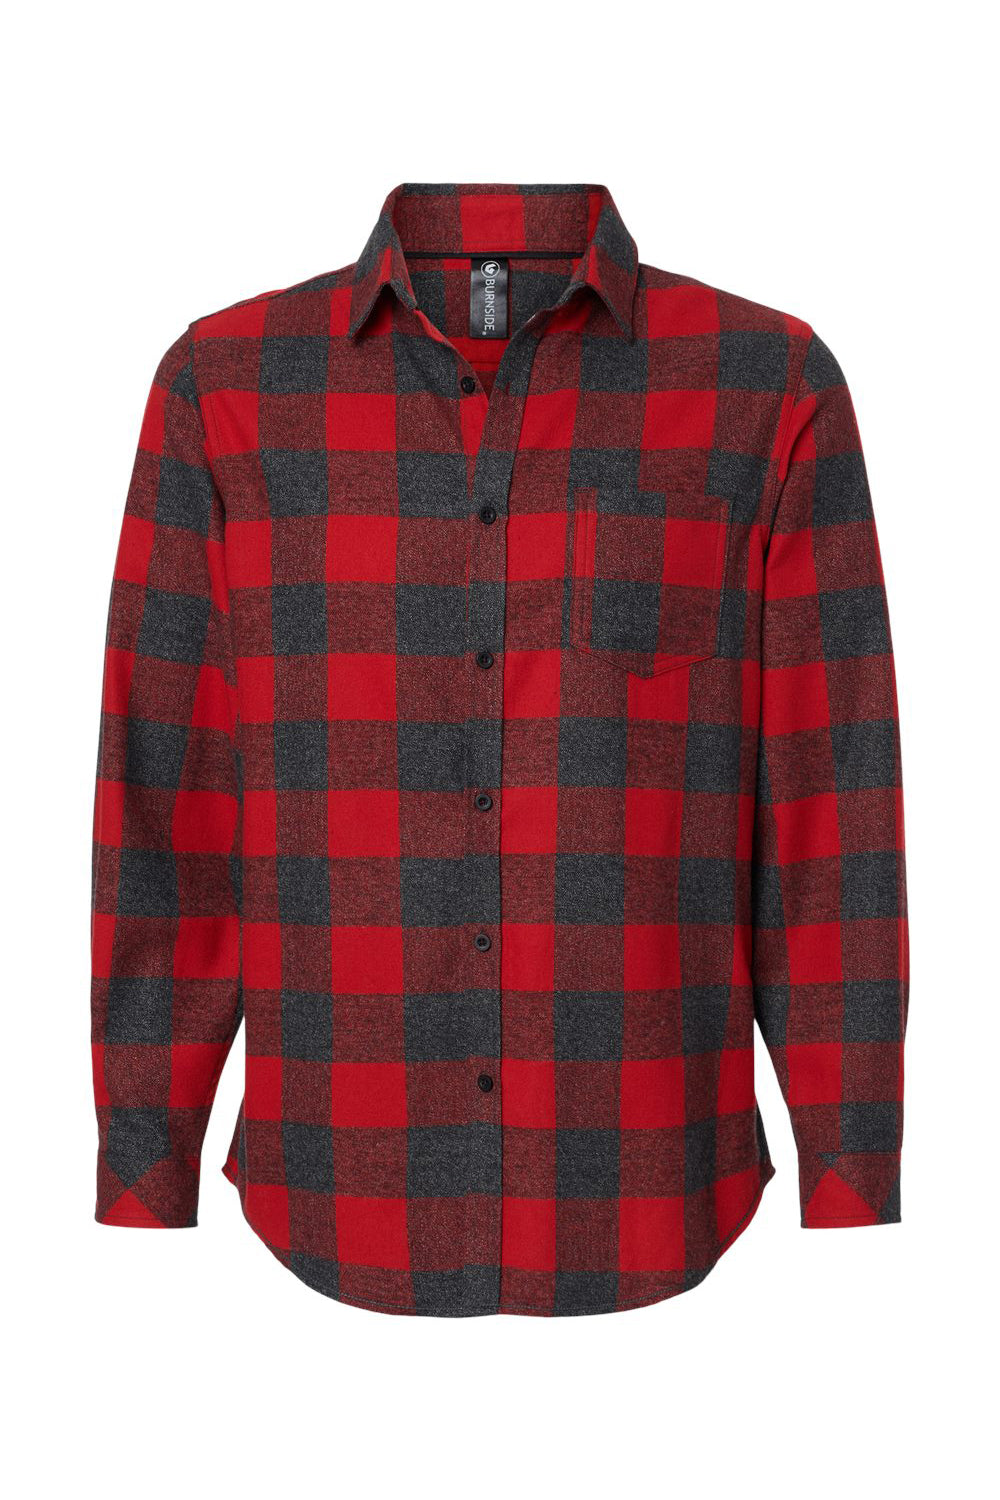 Burnside B8212 Mens Flannel Long Sleeve Button Down Shirt w/ Pocket Red/Heather Black Flat Front